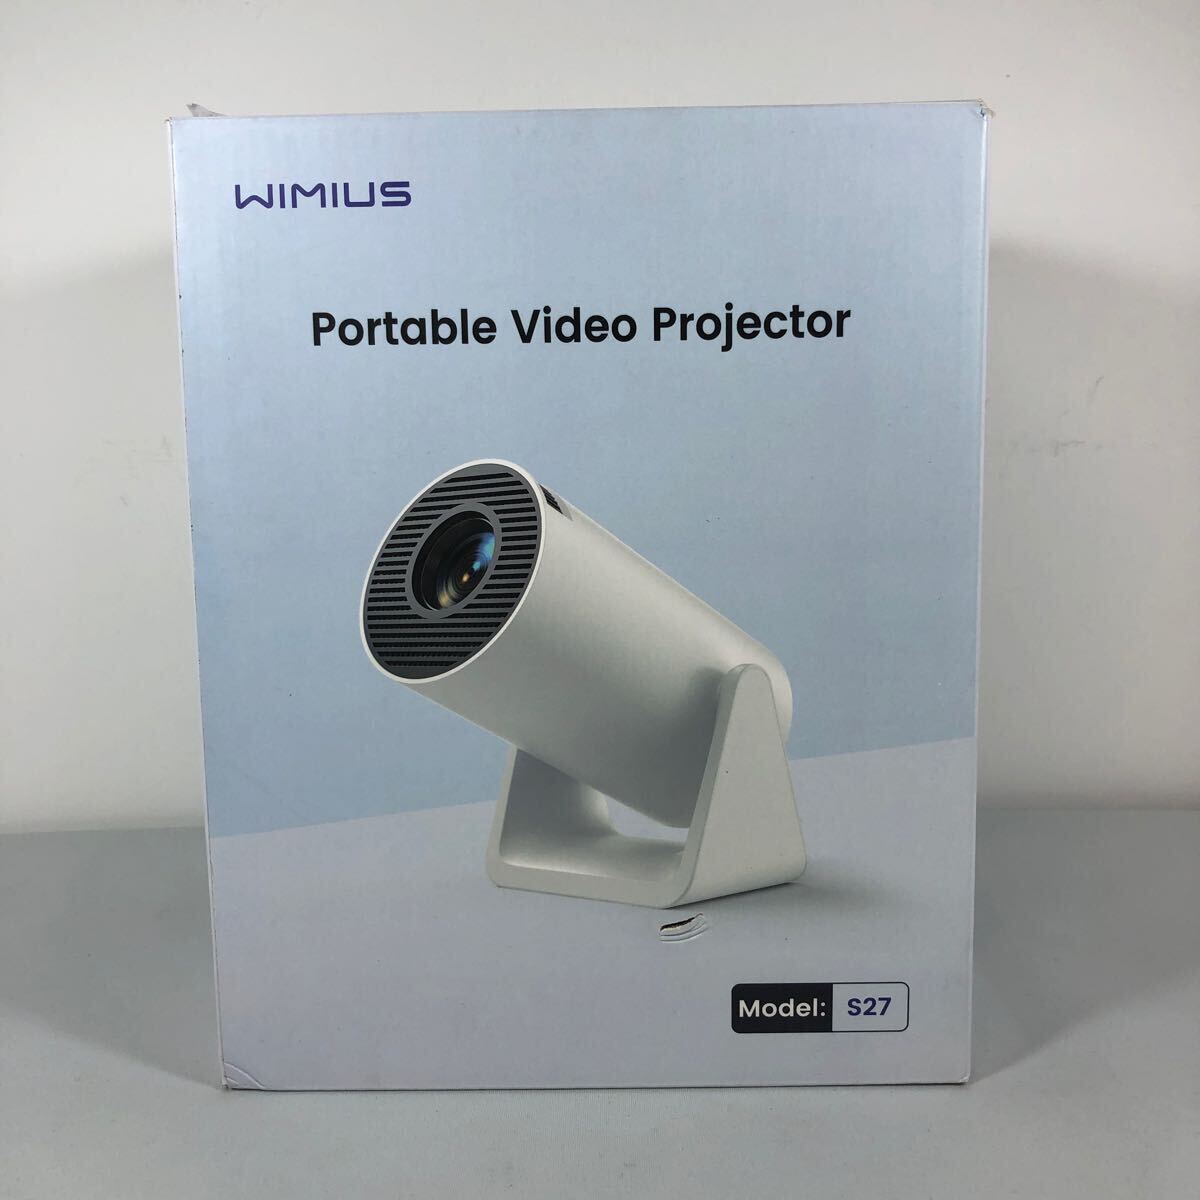 WIMIUS Portable Video Pojector Model S27 ポータブル ビデオ プロジェクターの画像1